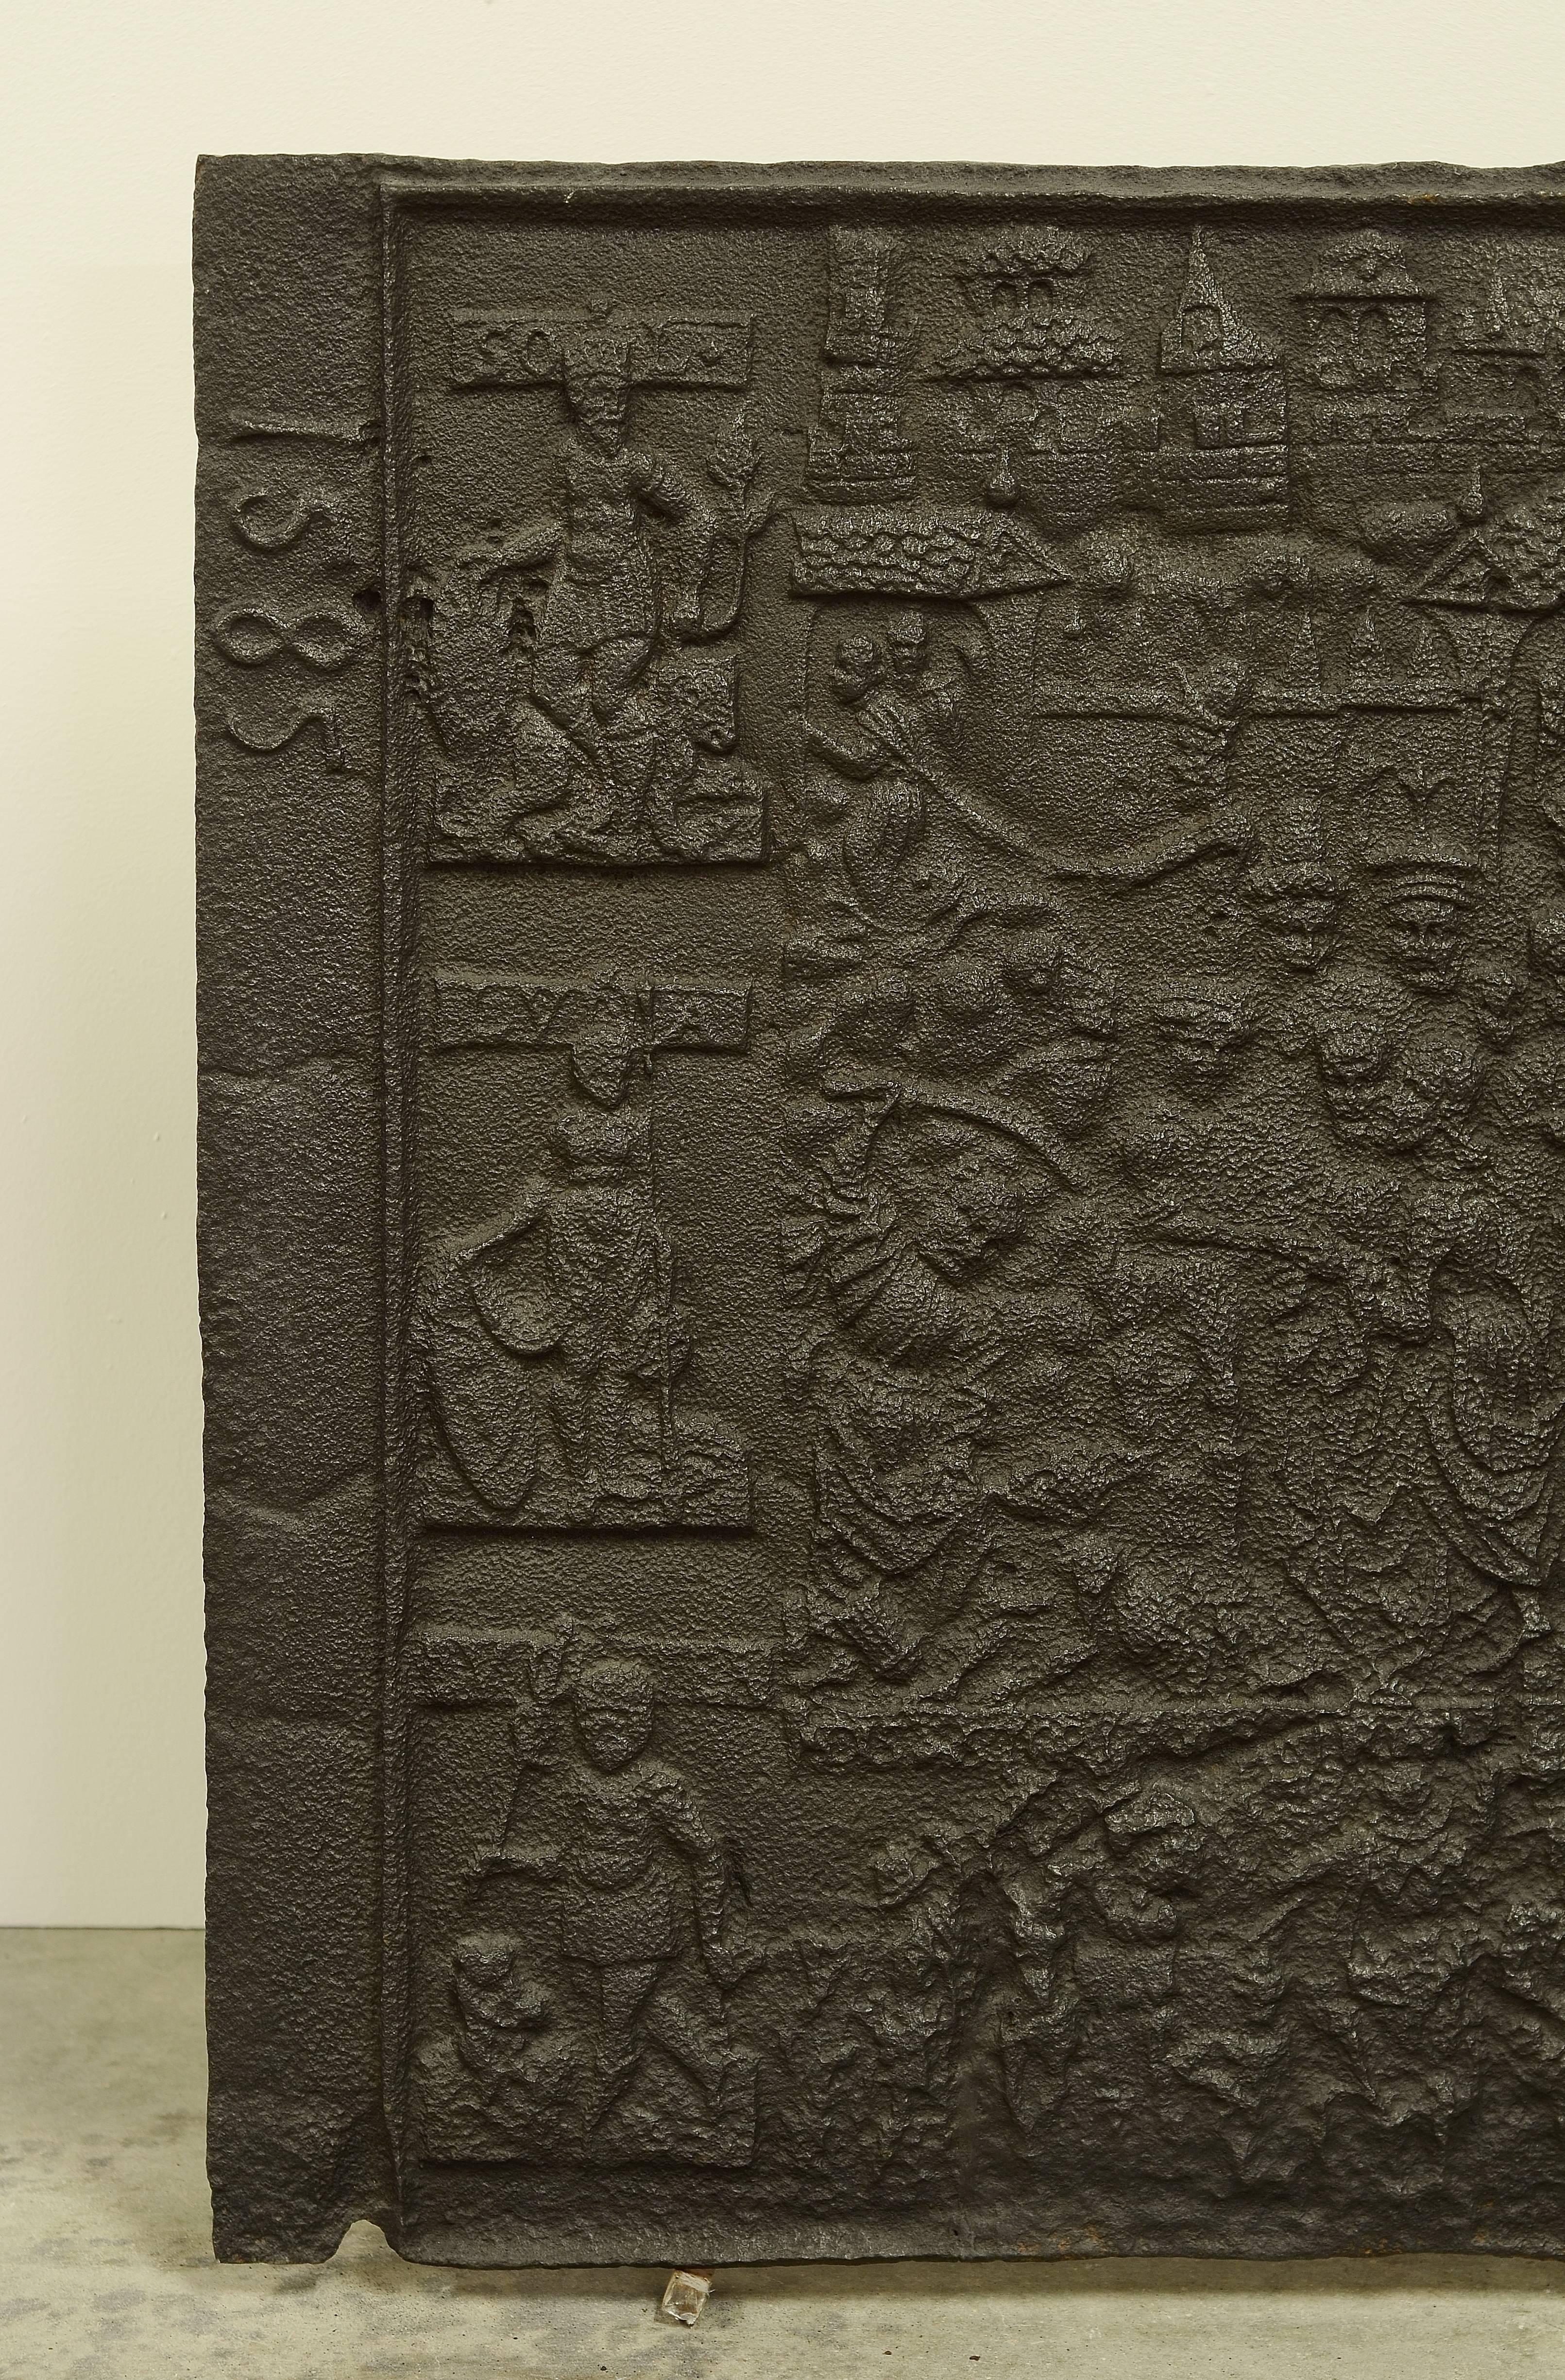 Gothic Unique Biblical Cast Iron Antique Fireback, Dated 1585